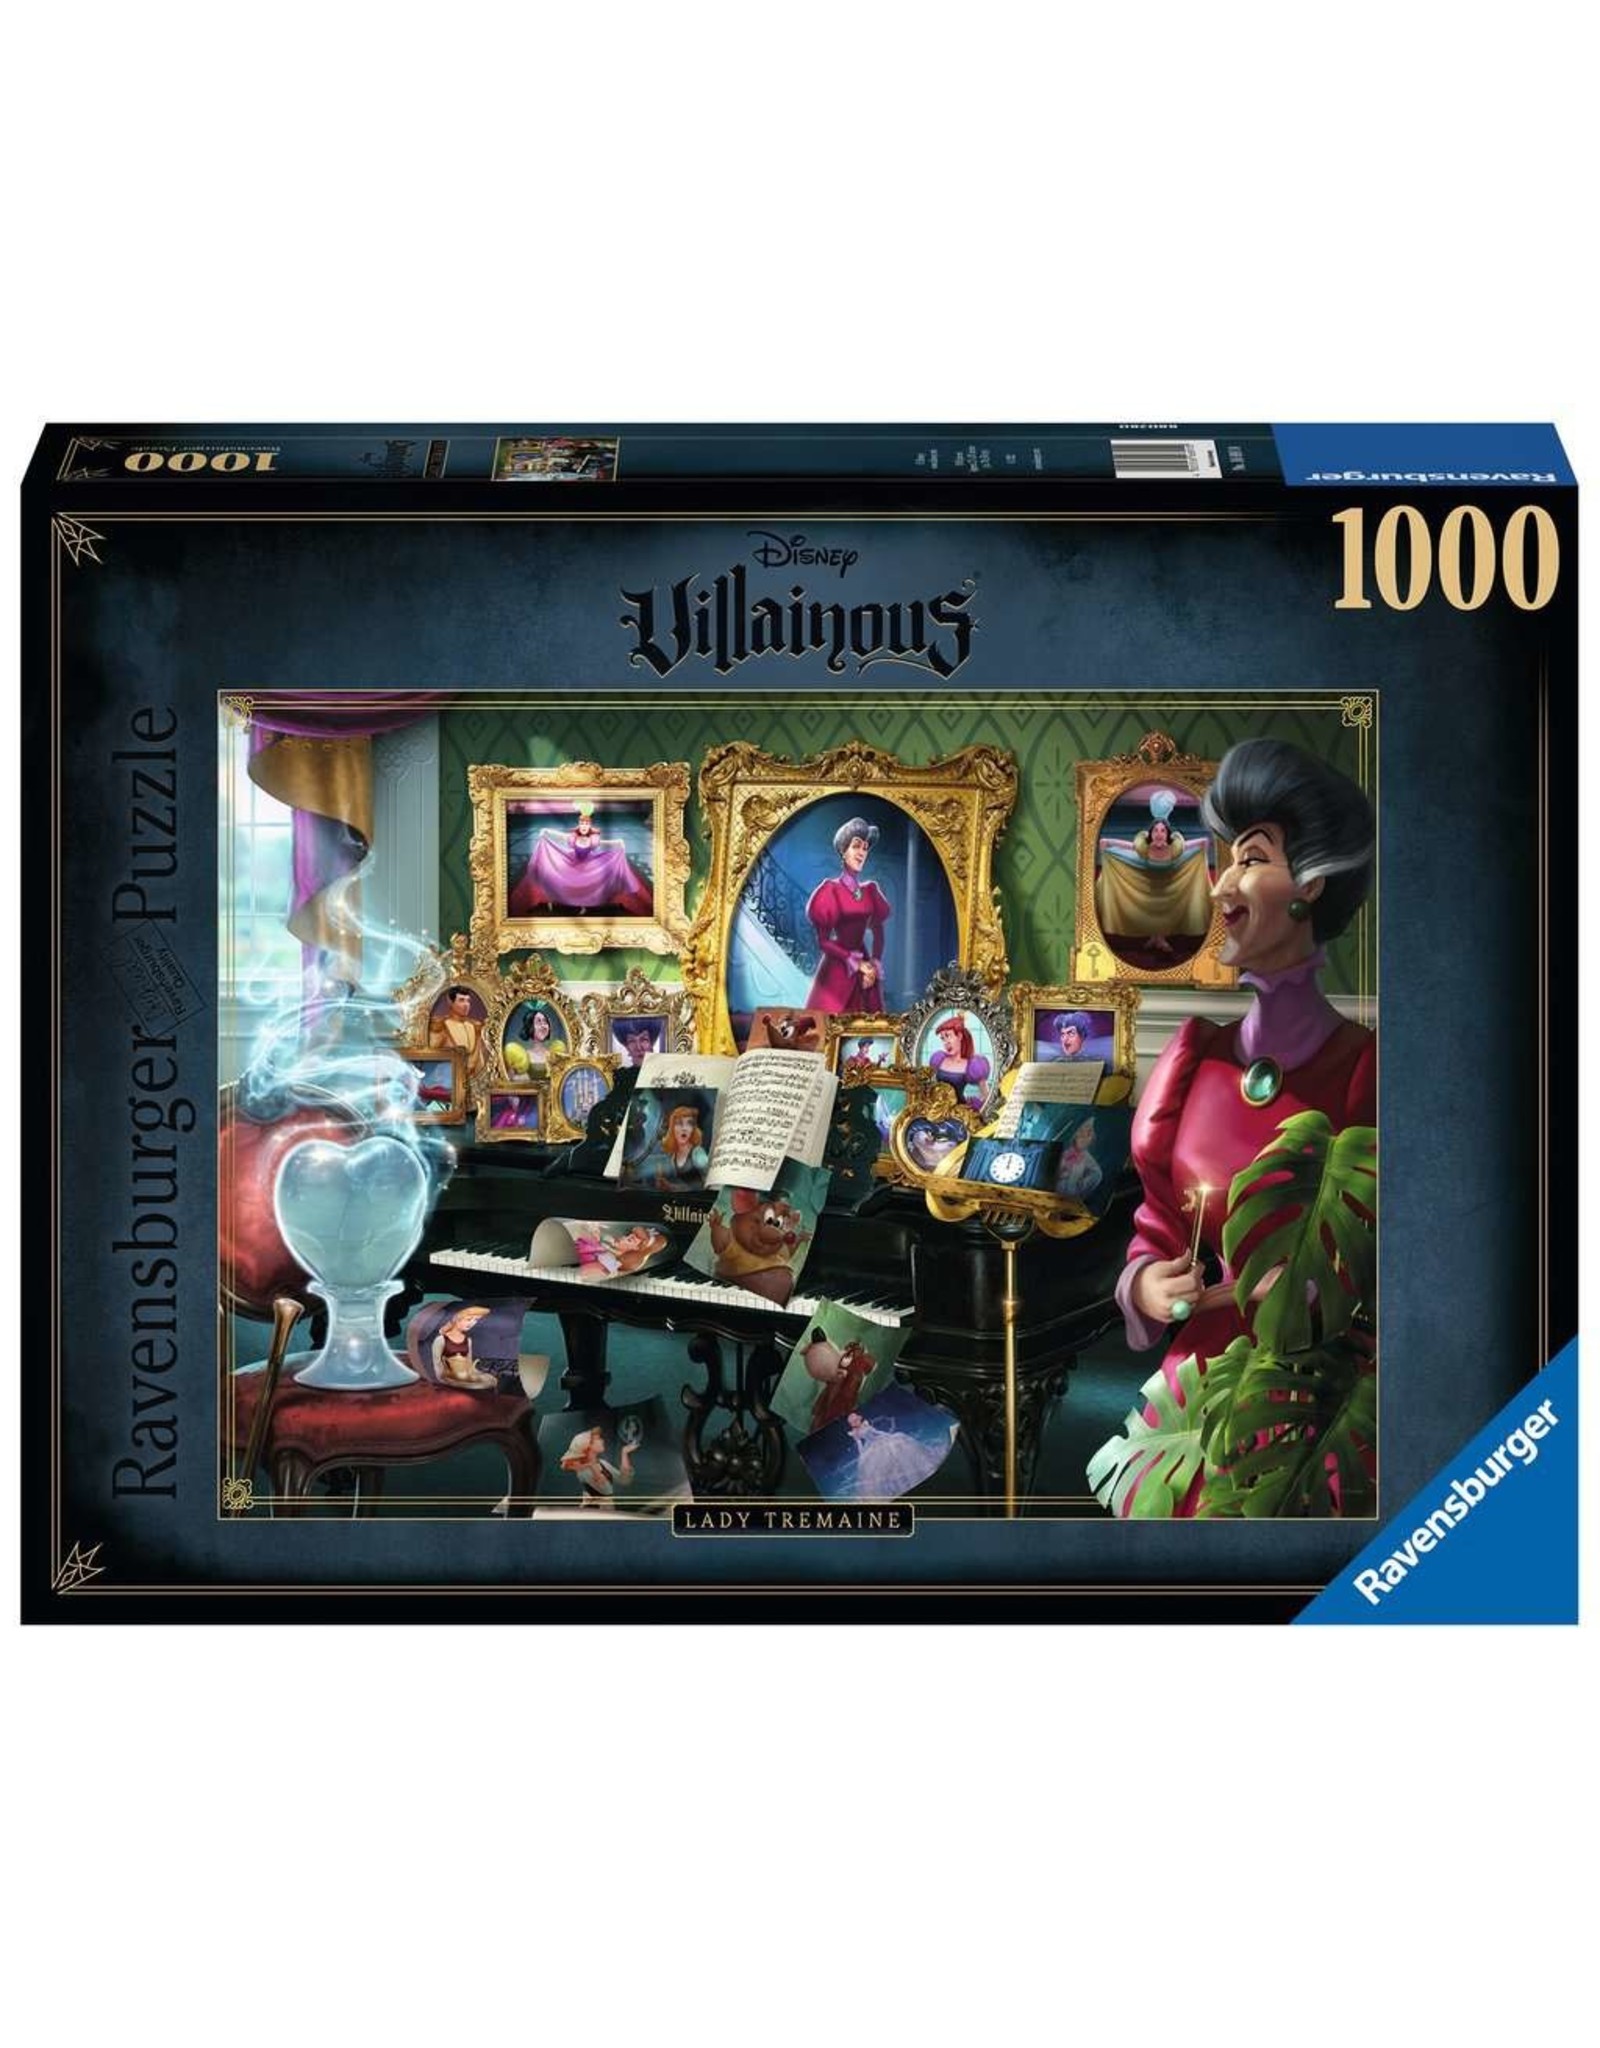 Ravensburger Disney Villainous: Lady Tremaine 1000pc